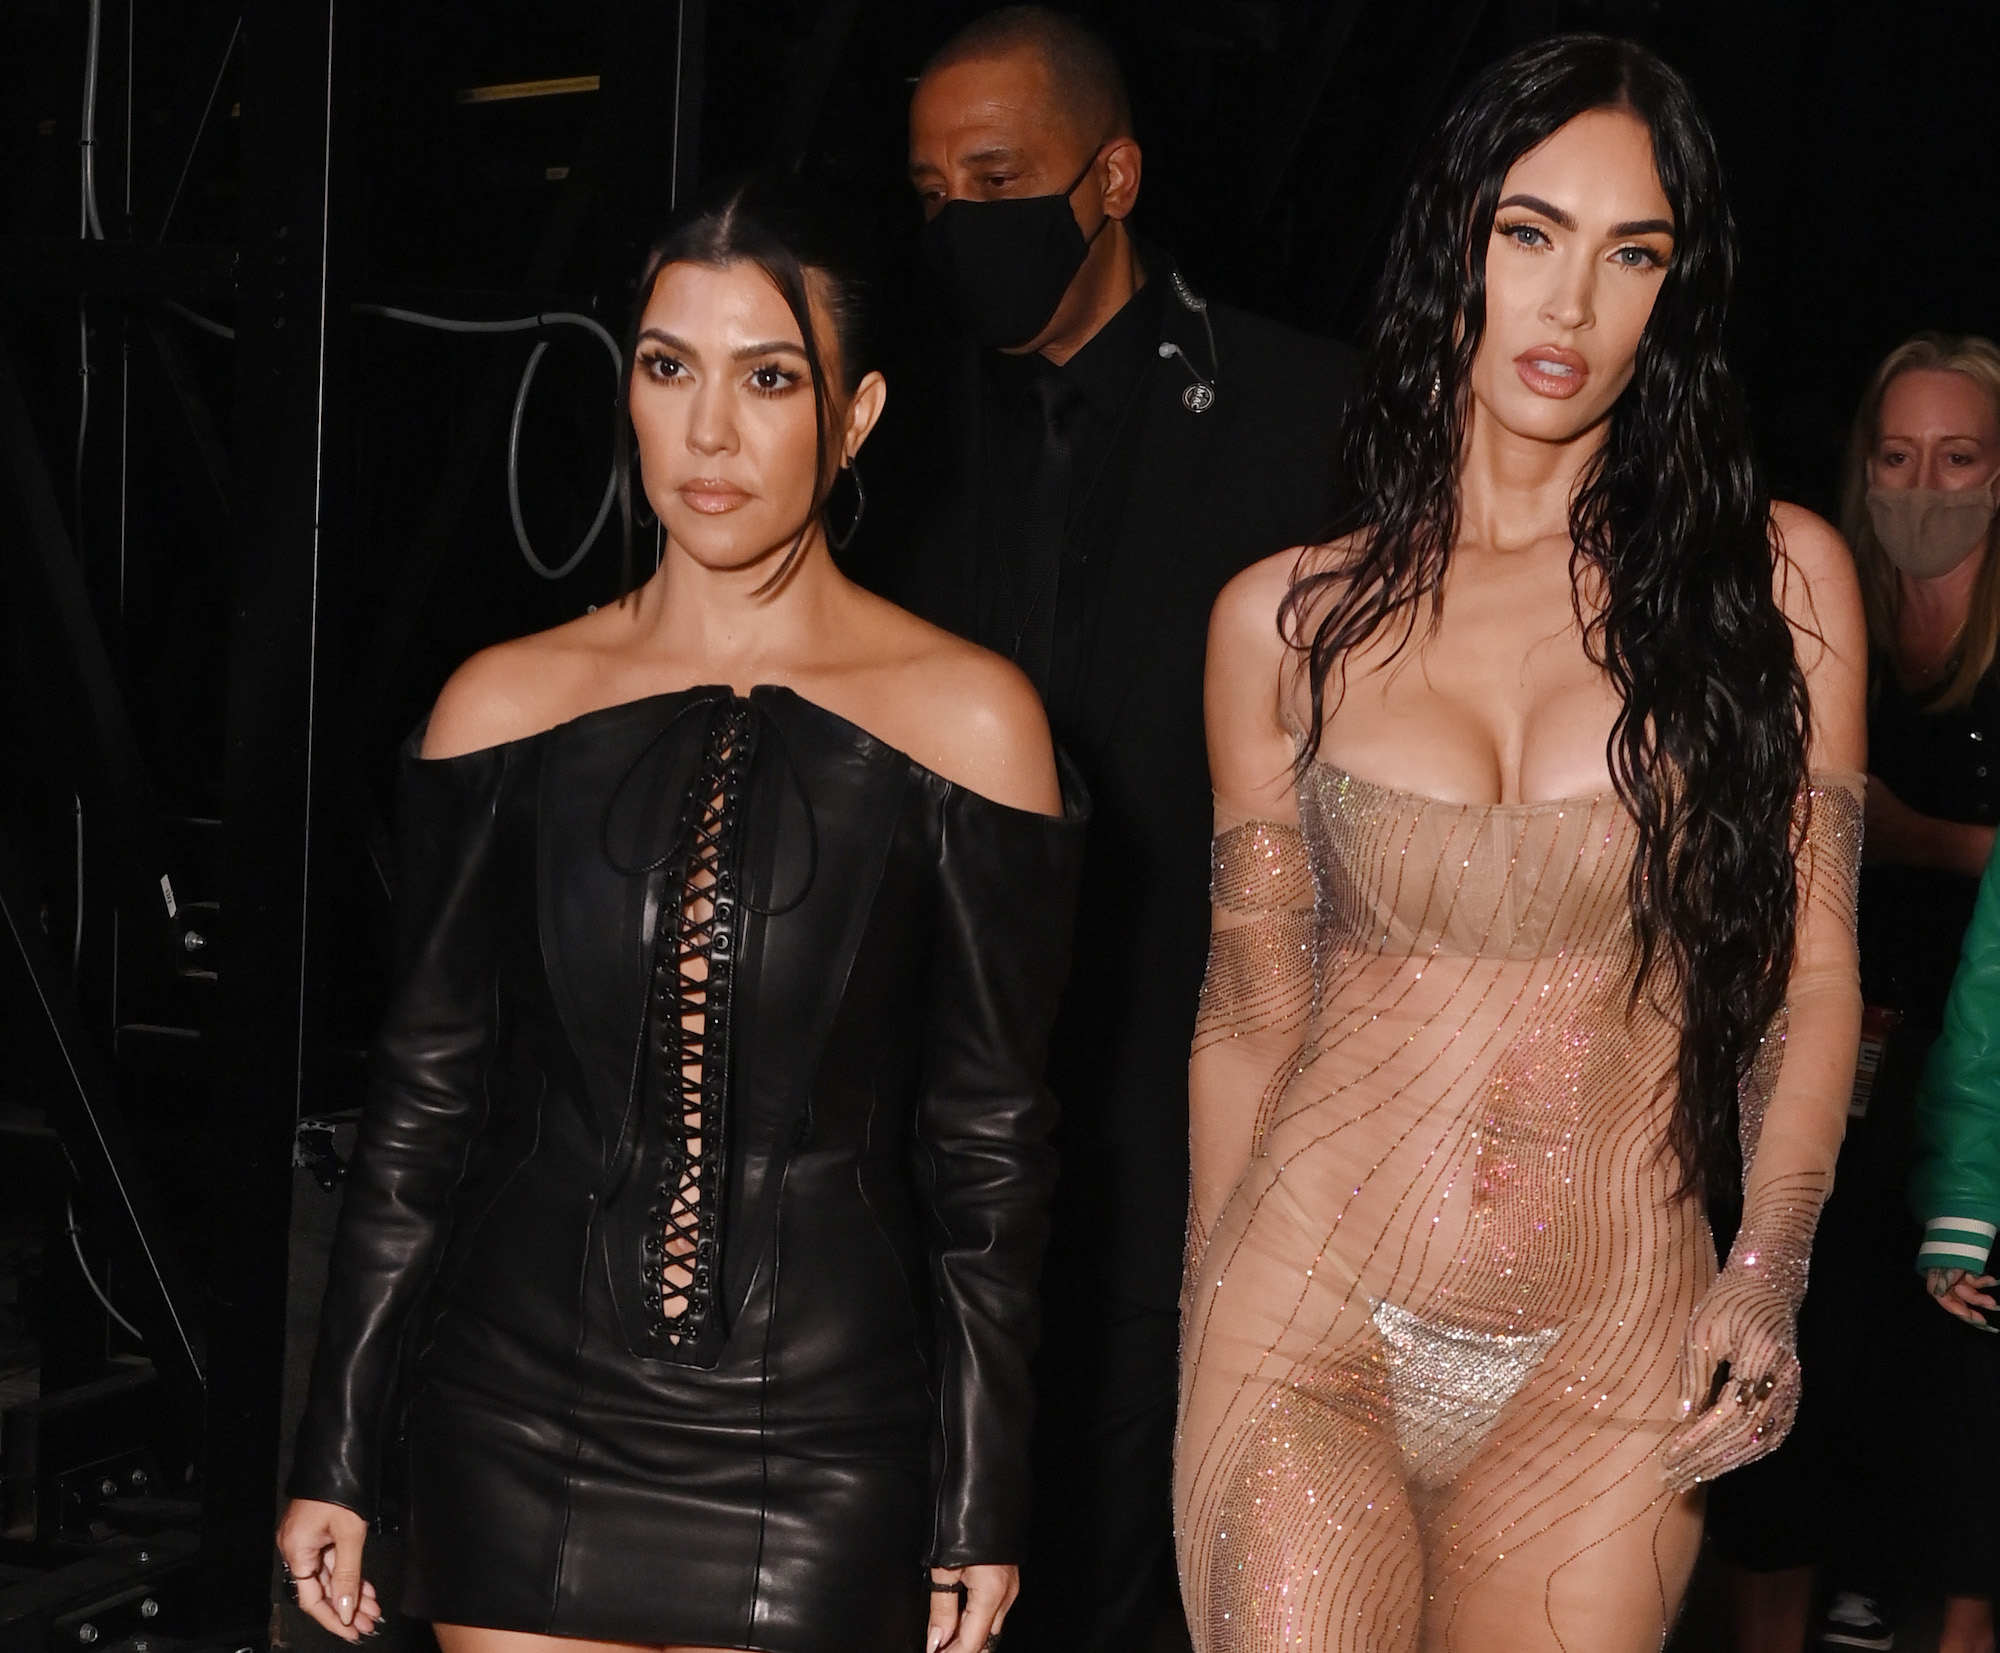 Kourtney Kardashian and Megan Fox attending the 2021 MTV Video Music Awards